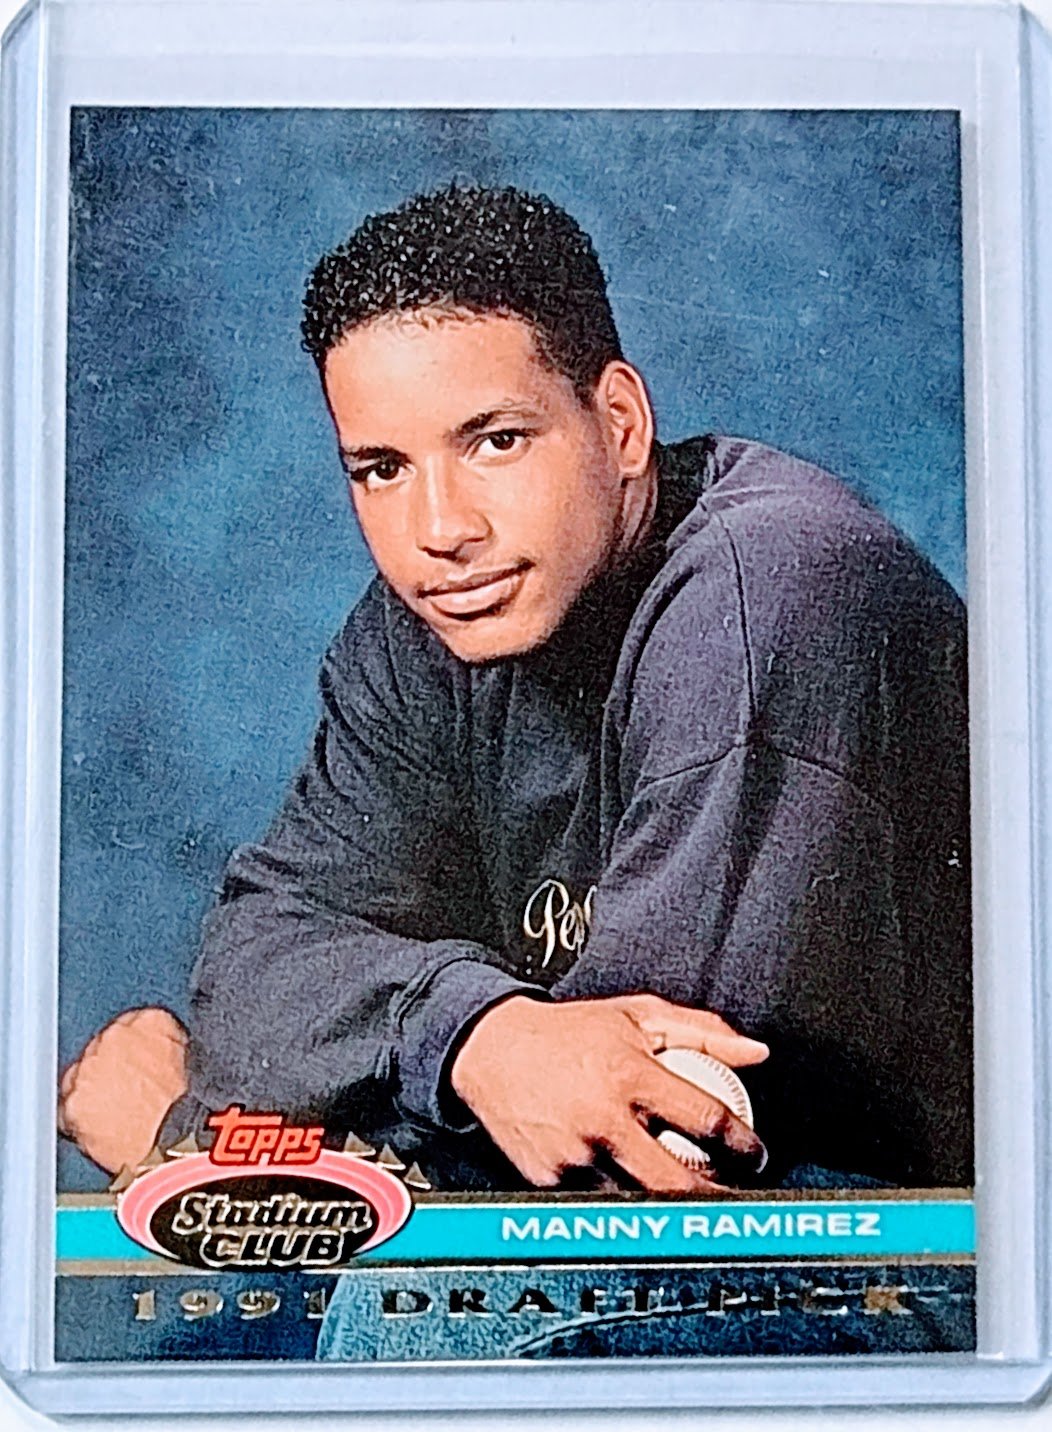 1992 Topps Stadium Club Dome Manny Ramirez 1991 Draft Picks MLB Baseball Trading Card TPTV simple Xclusive Collectibles   